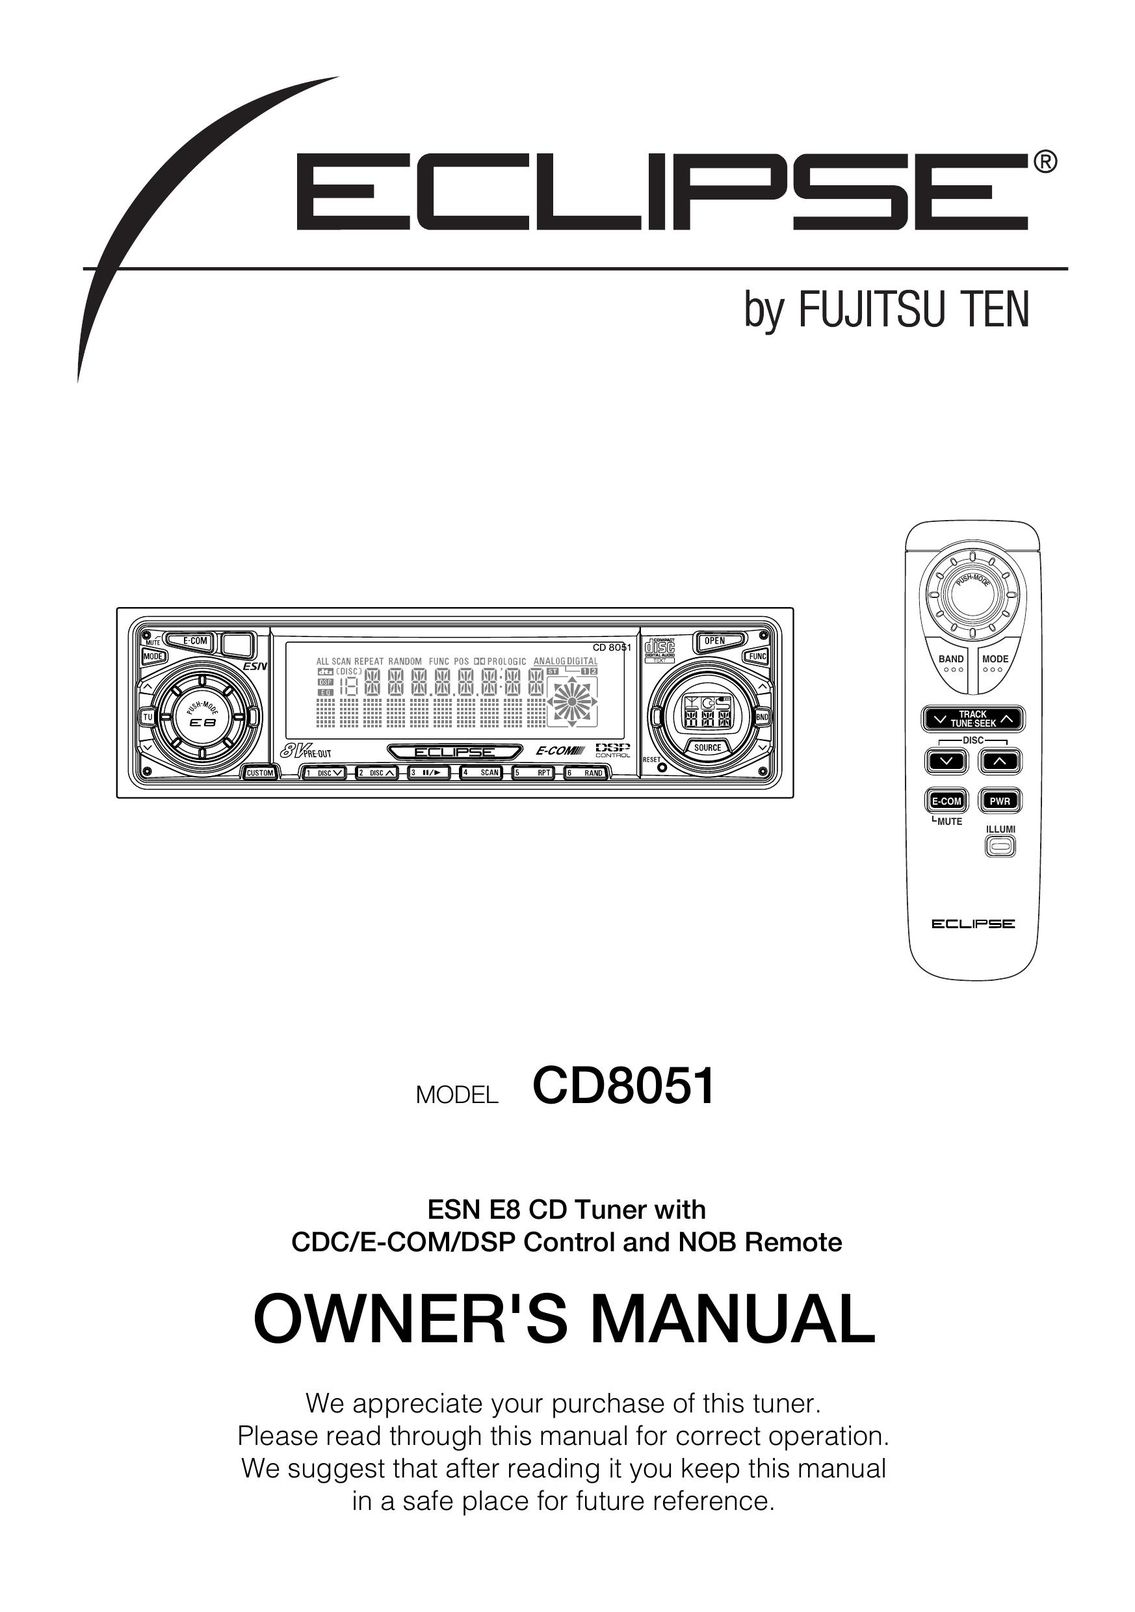 Eclipse - Fujitsu Ten CD8051 Clock User Manual